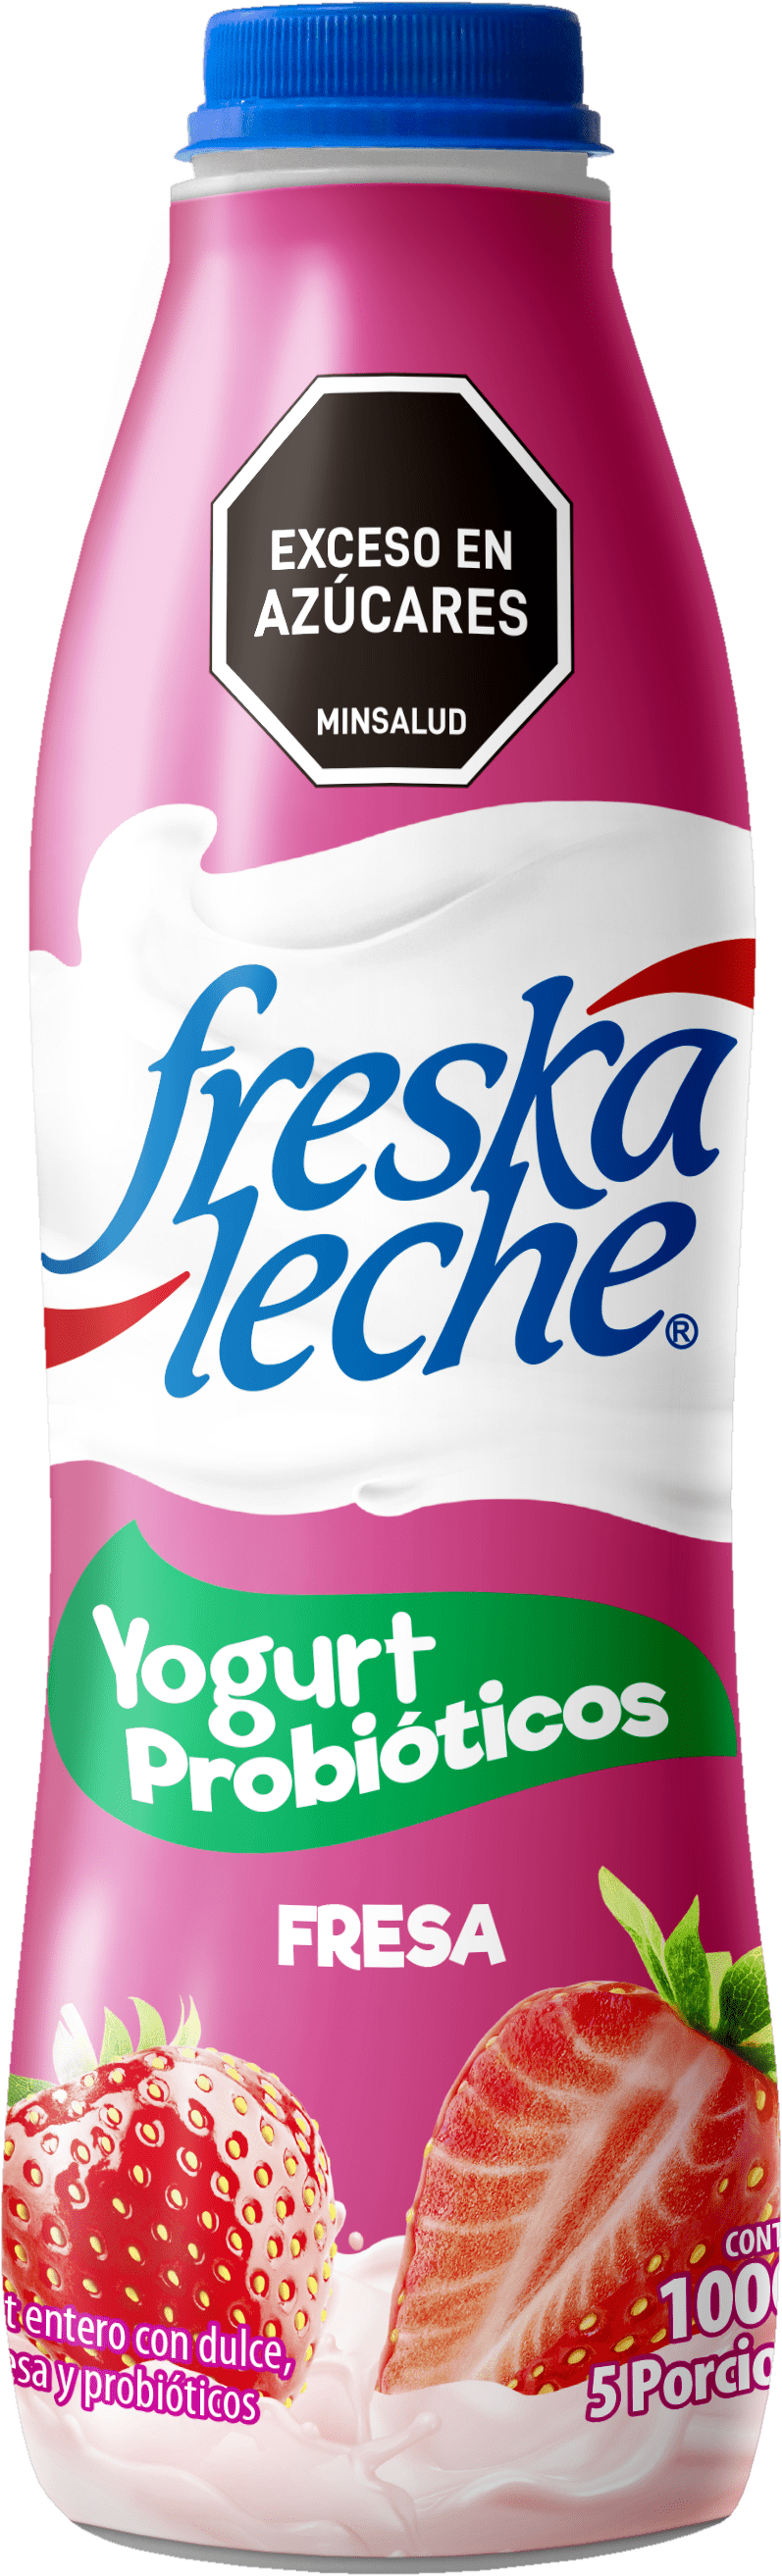 yogurt freskaleche